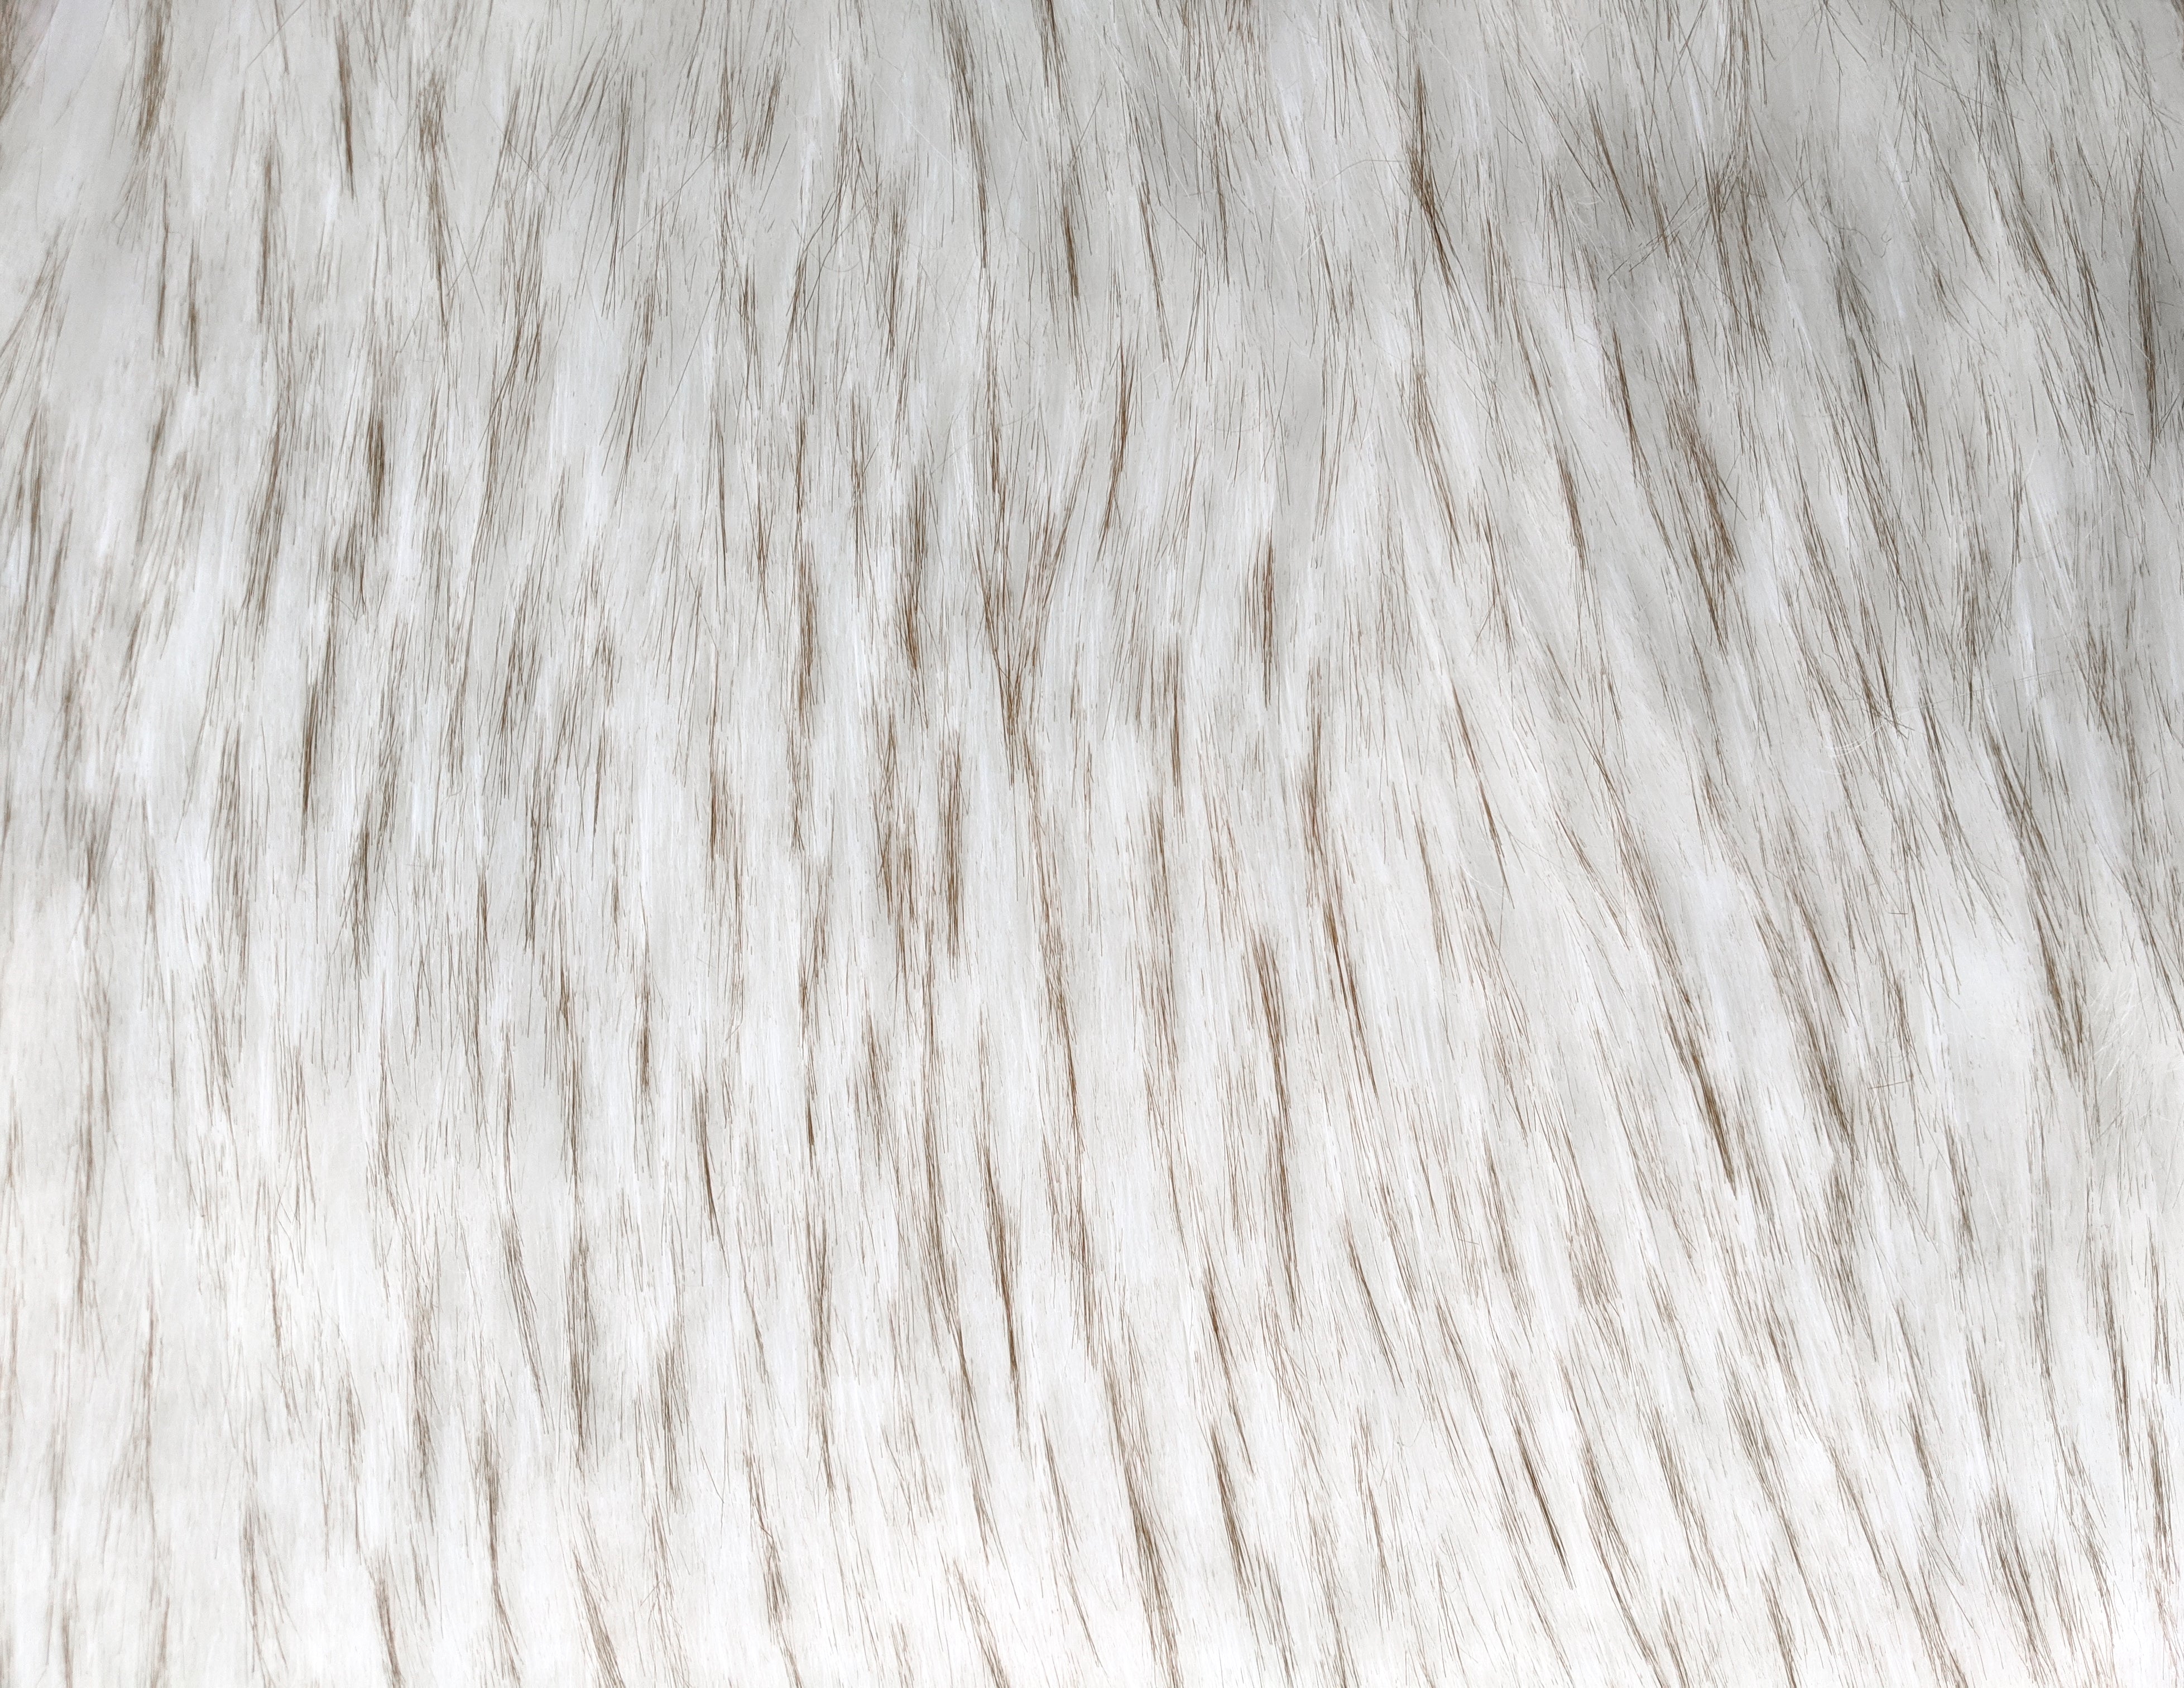 Long pile natural white faux fur fabric laid flat.